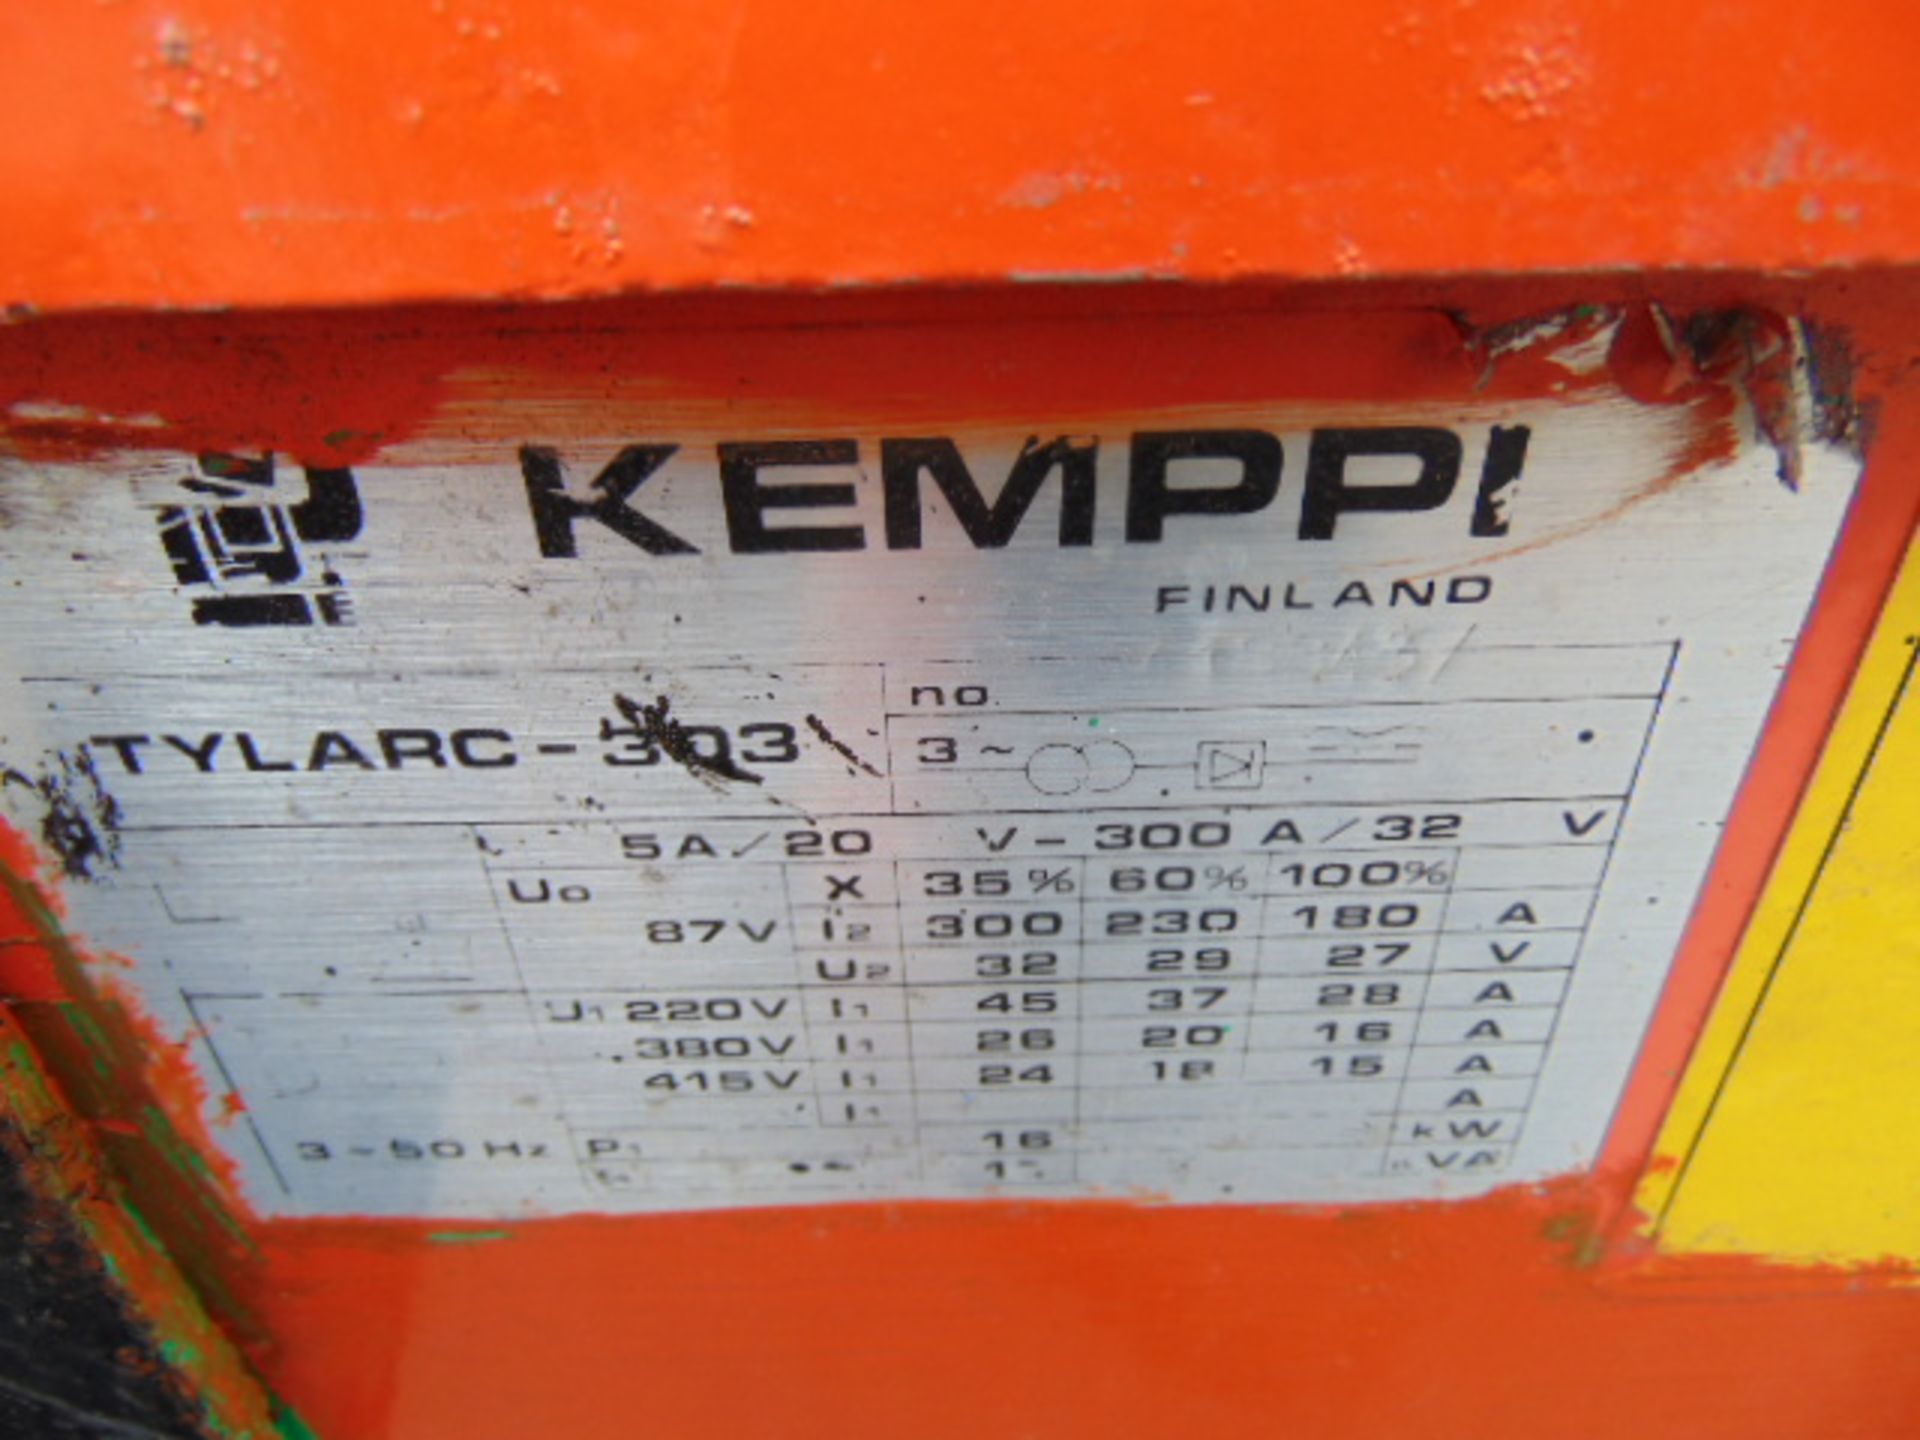 Kemmpi Tylarc 303, 300 AMP Mobile Arc Welder - Image 7 of 7